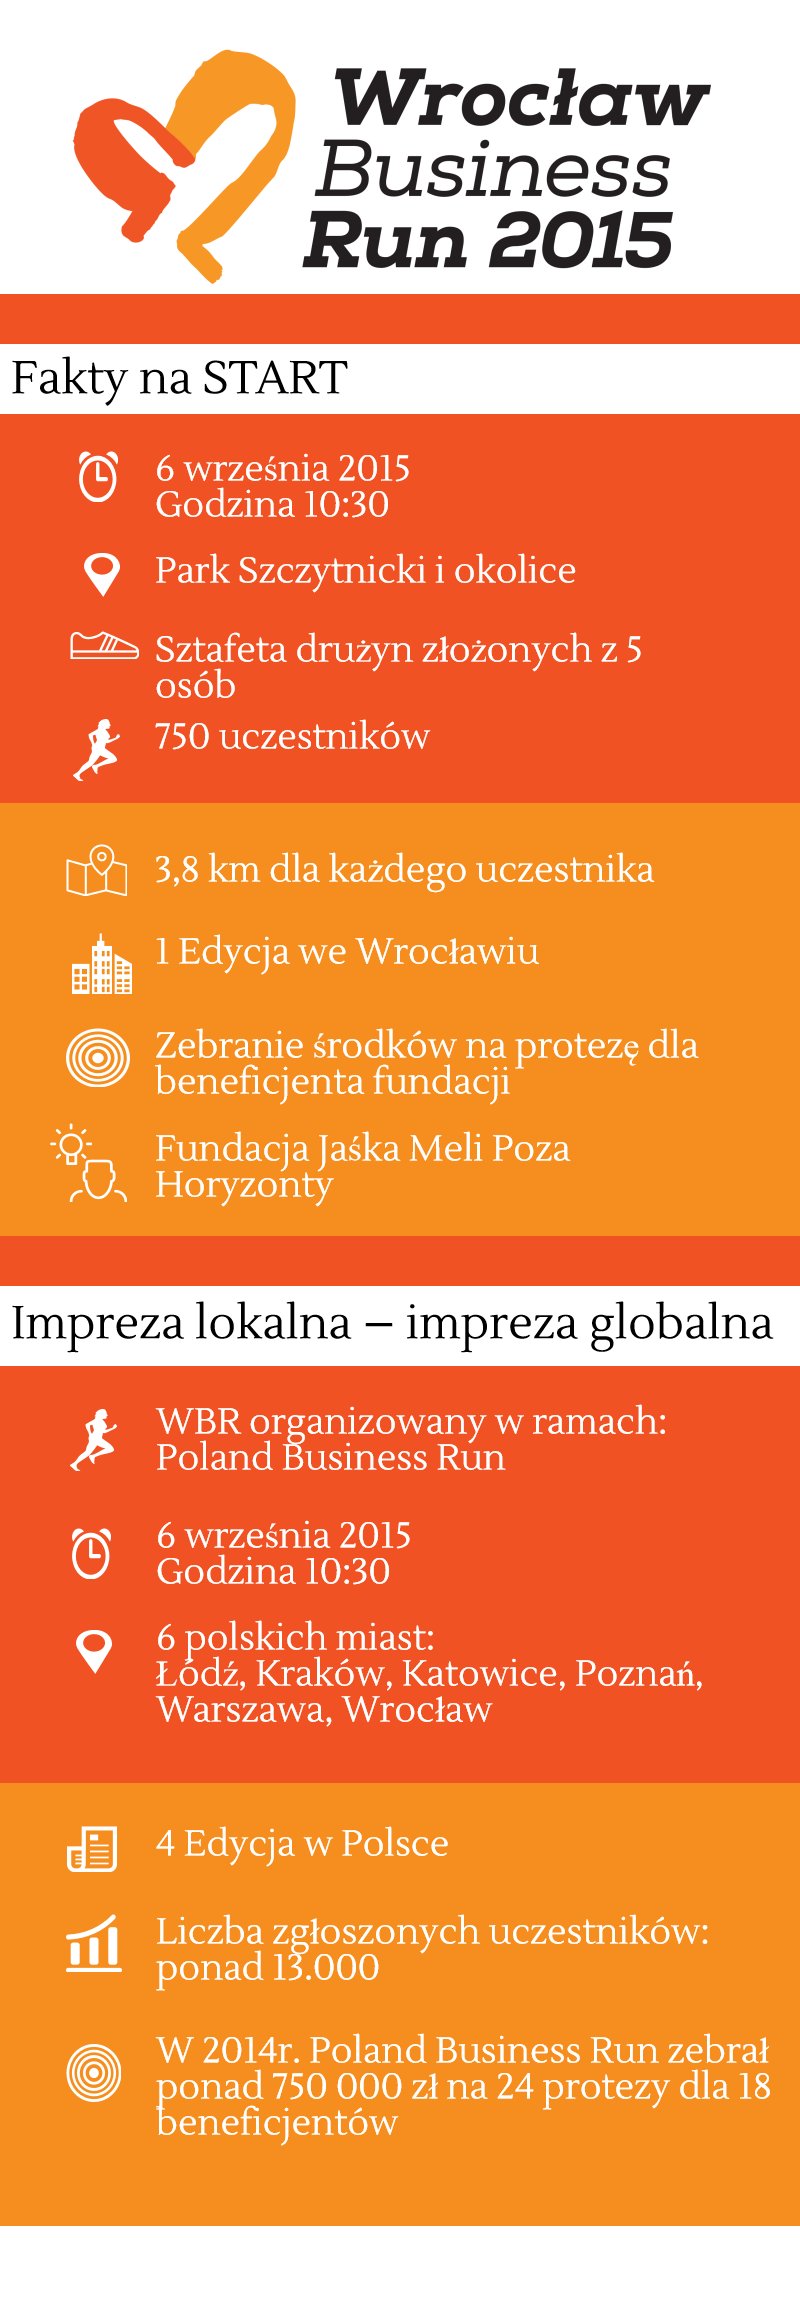 Rusza Wrocław Business Run